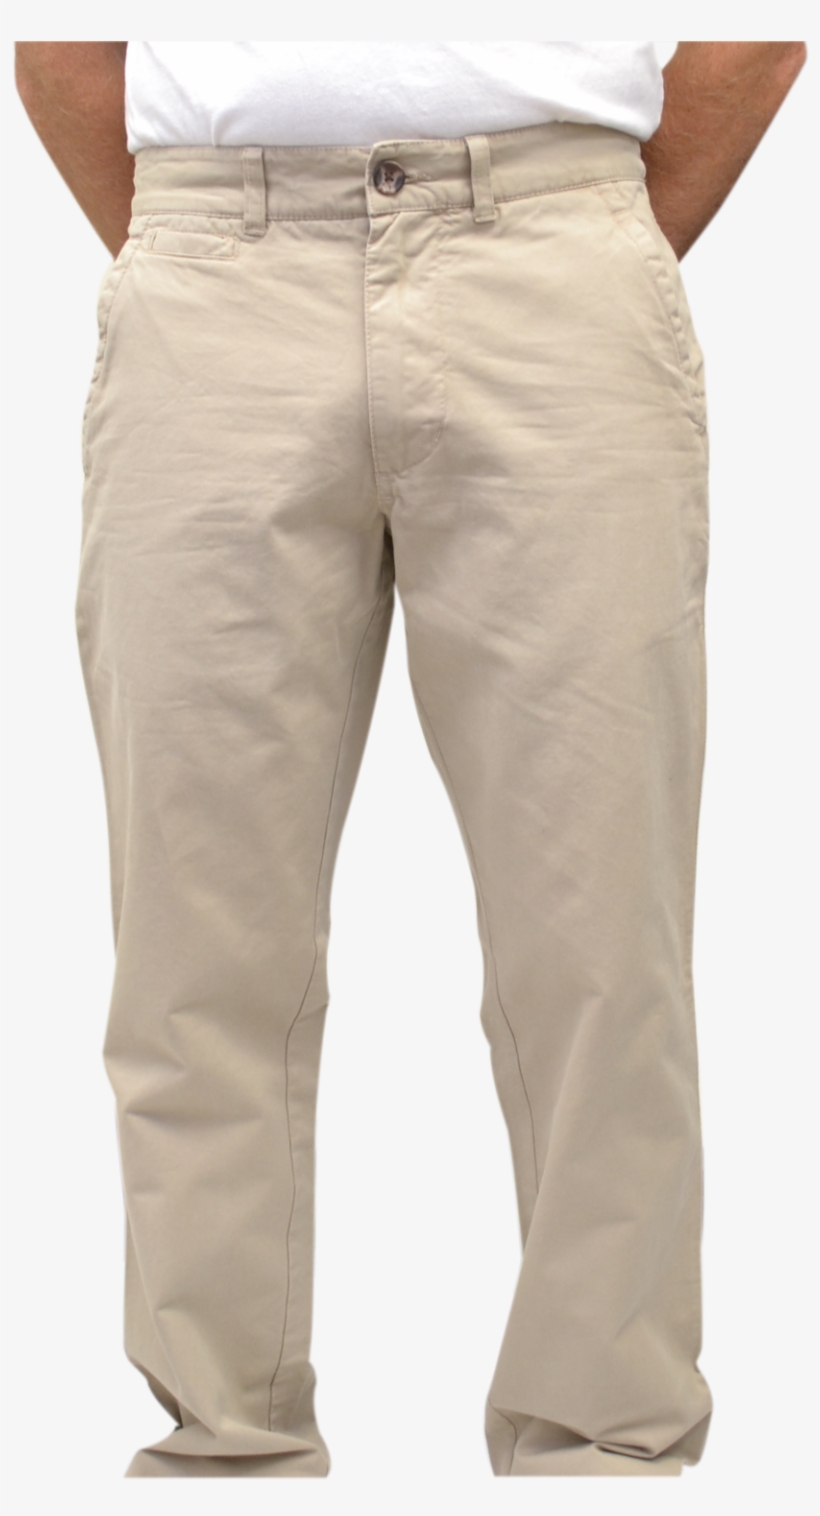 Classic American Clothing For Men Vintage Khaki - Pocket, transparent png #2525466